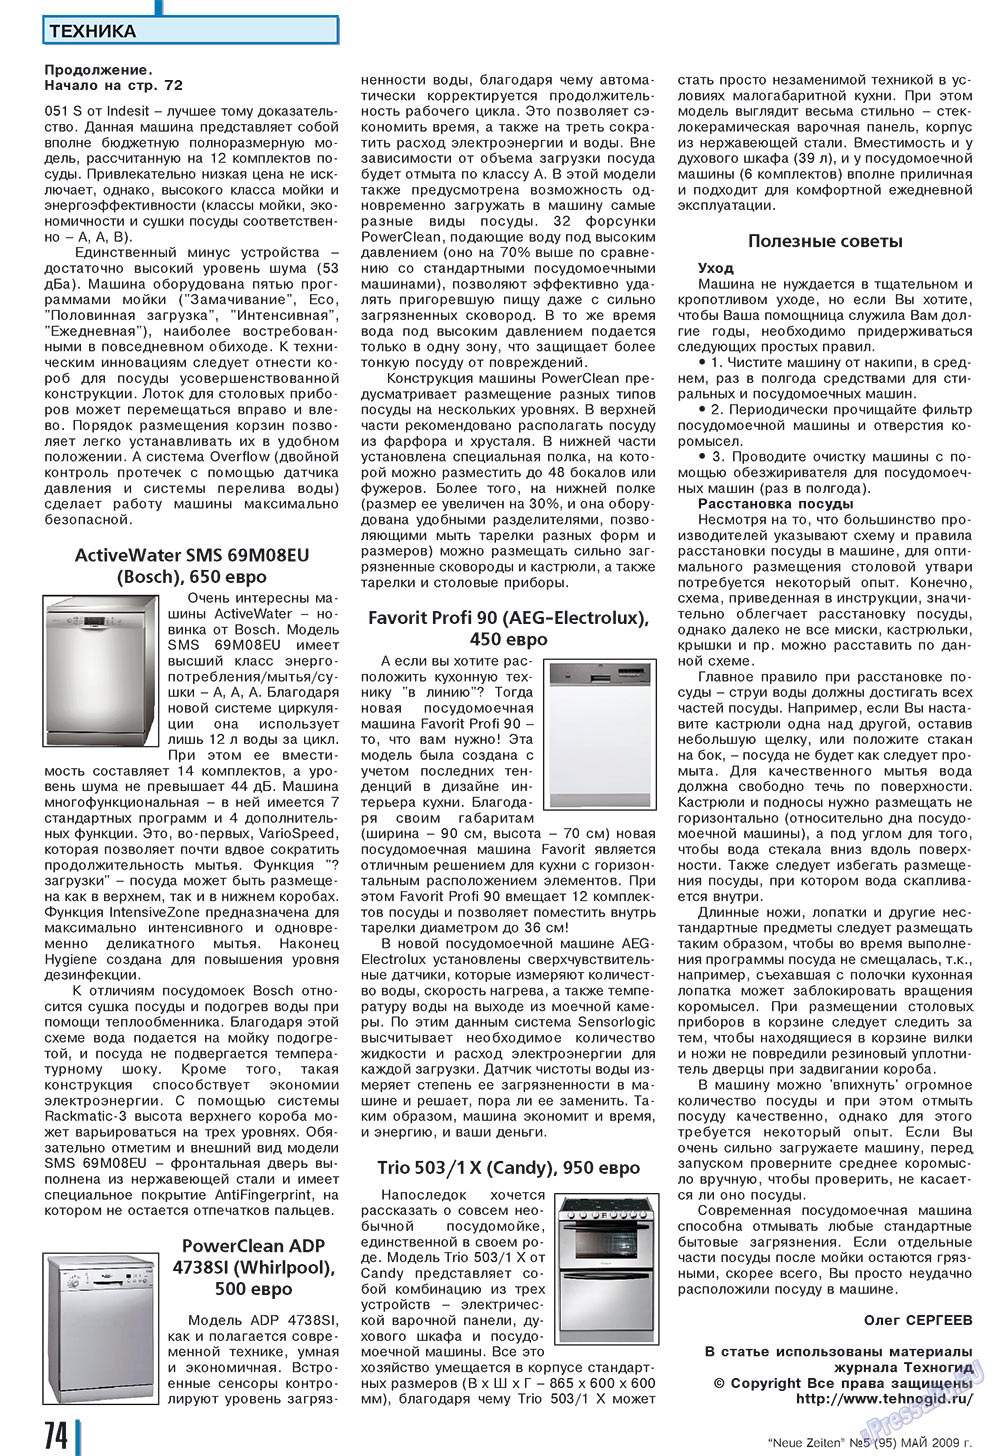 Neue Zeiten (журнал). 2009 год, номер 5, стр. 74